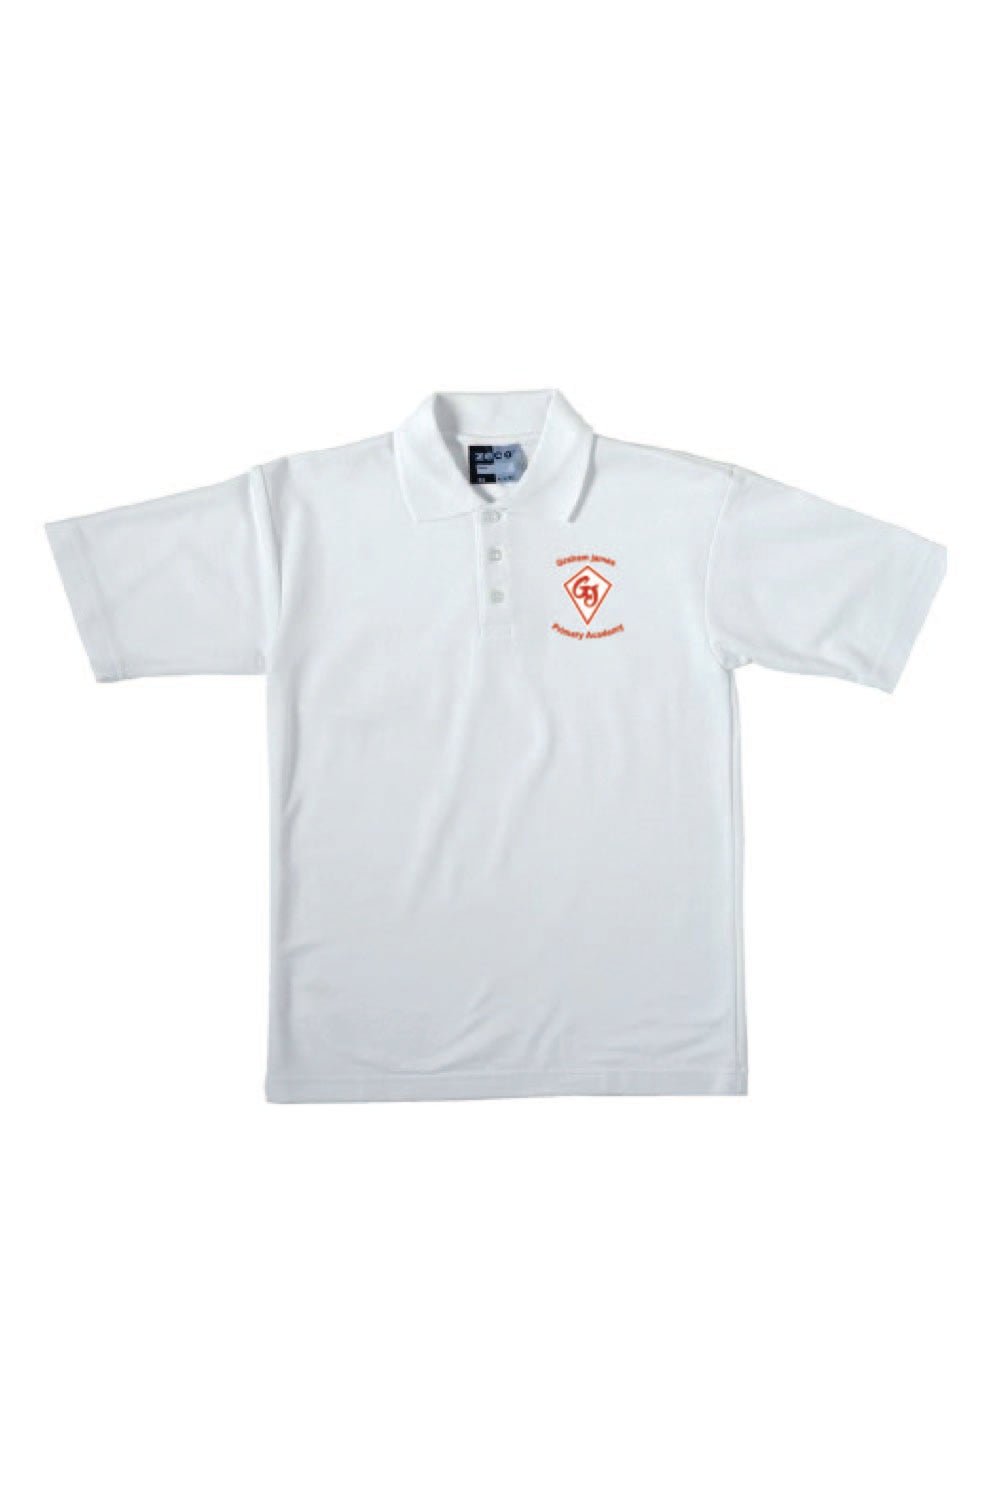 Graham James Polo Shirt - Uniformwise Schoolwear